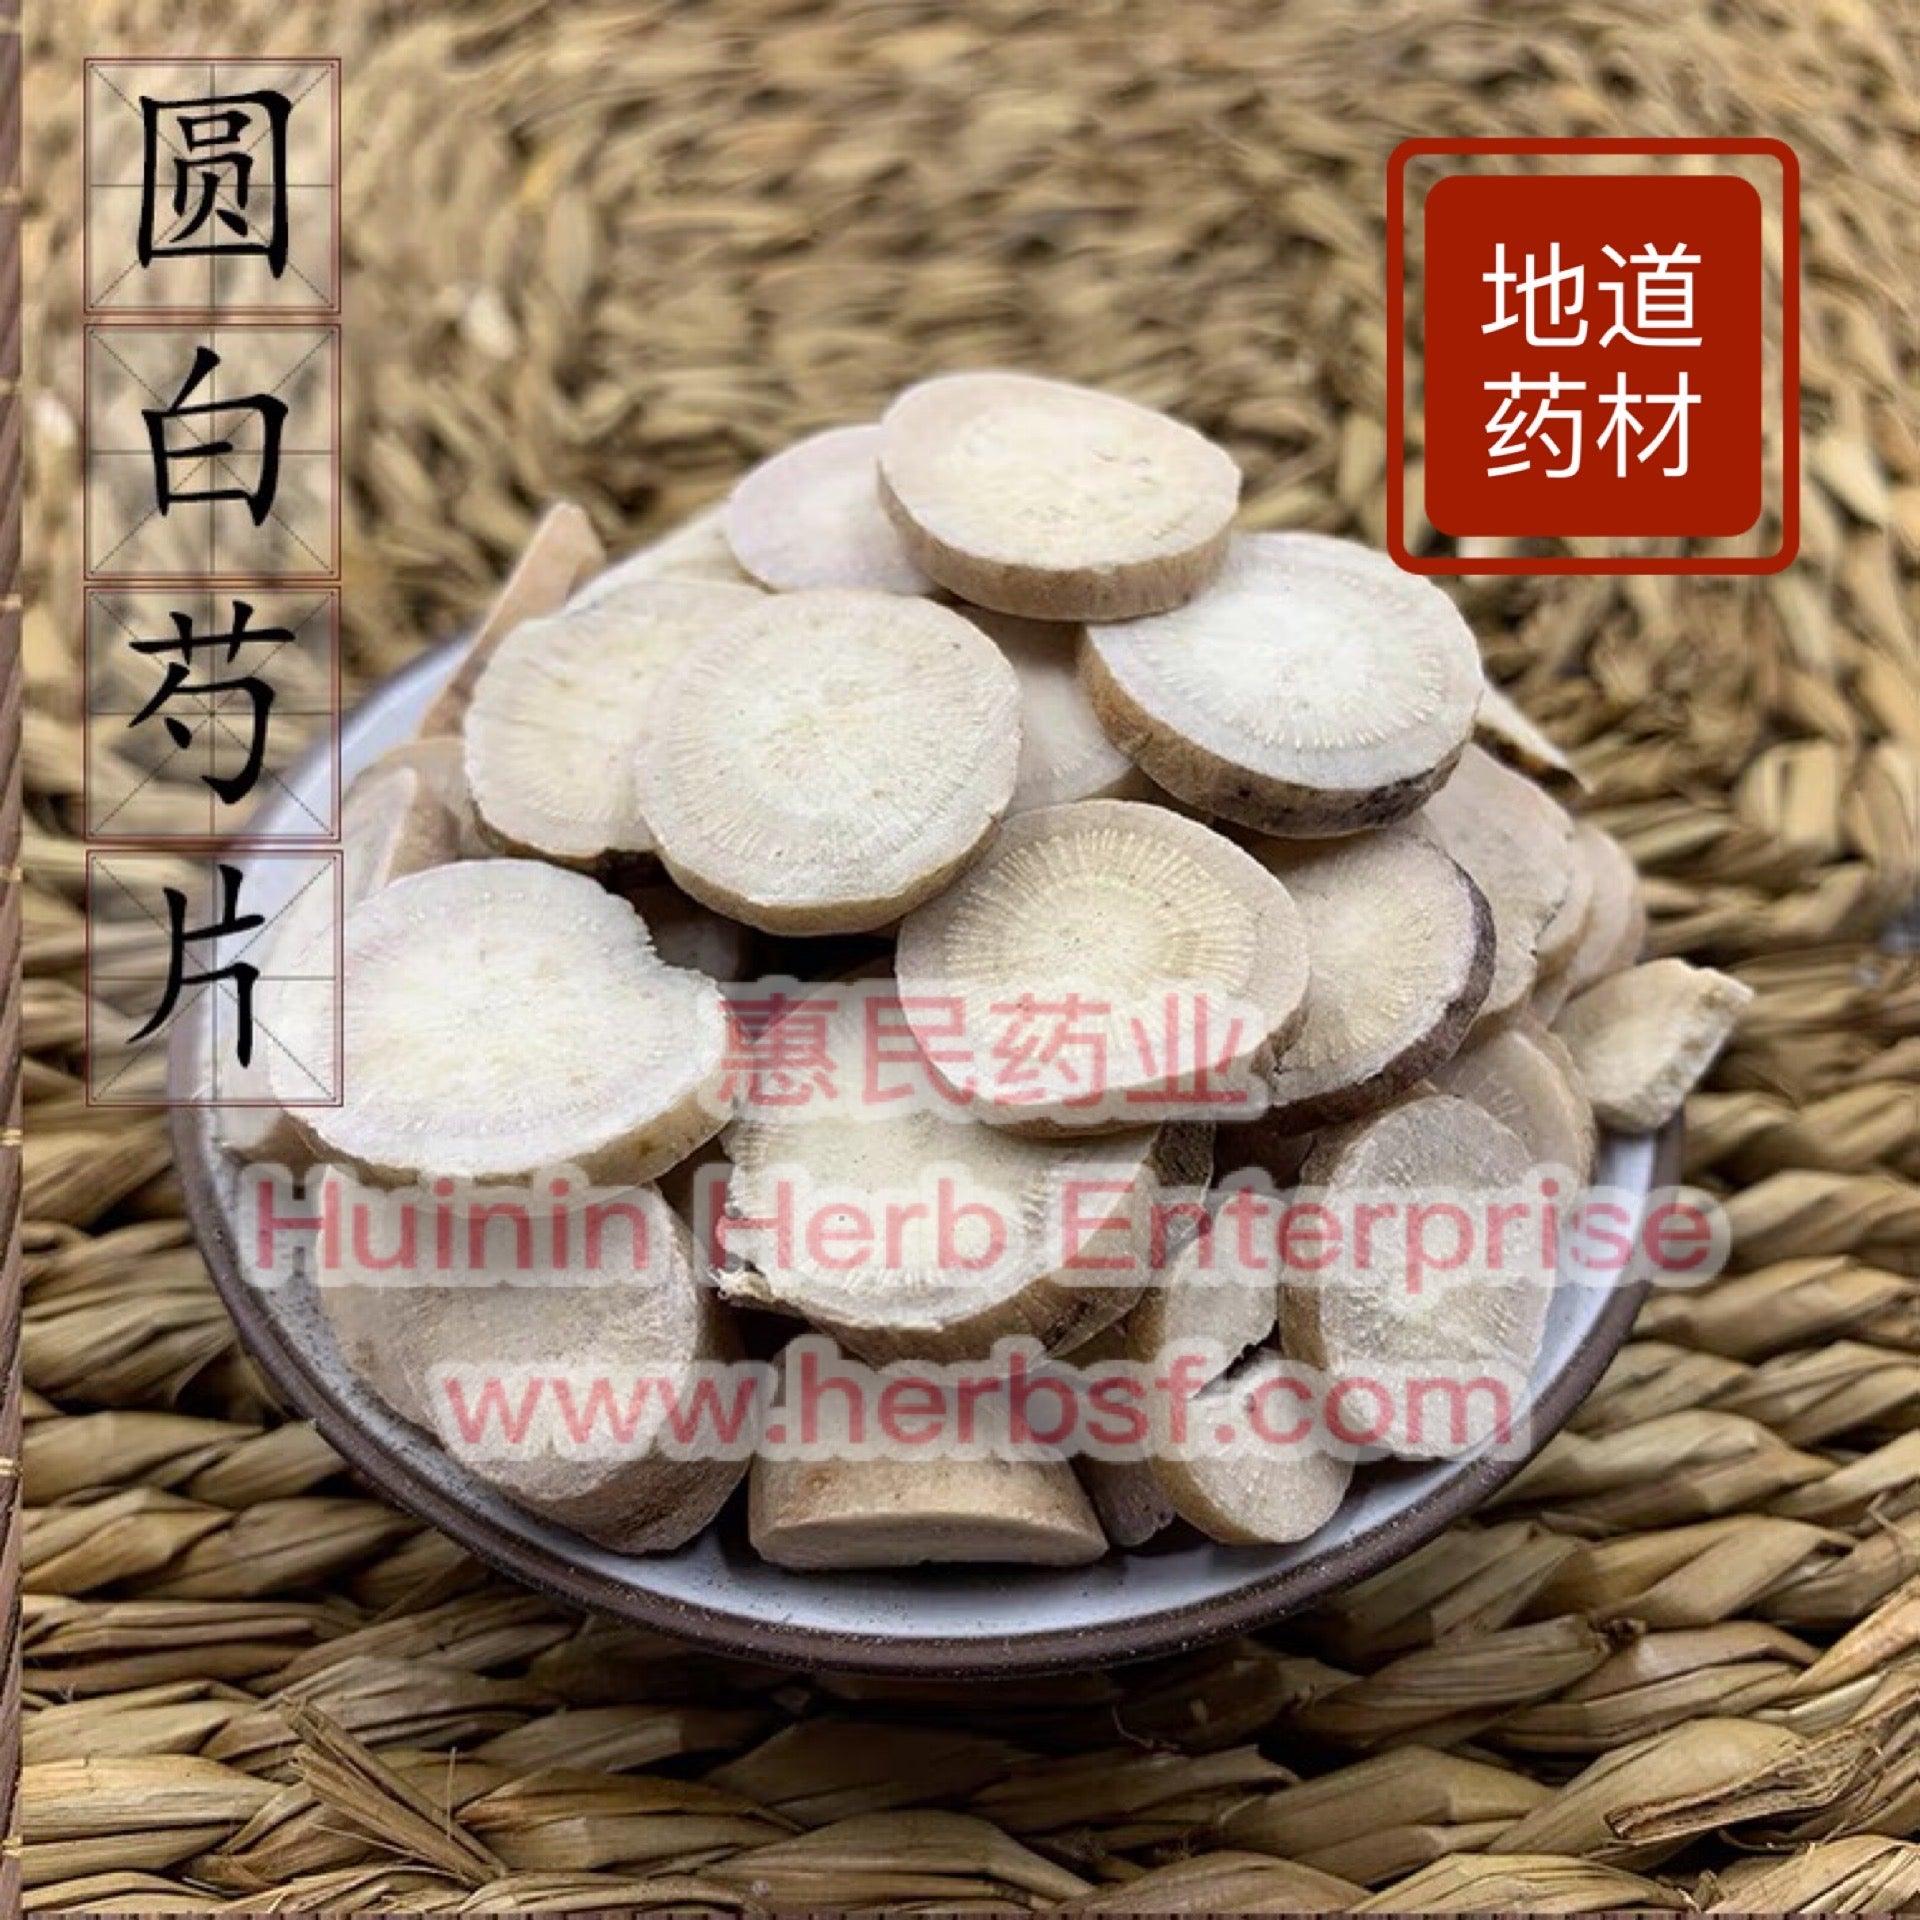 Bai Shao (White Peony Root) 4oz www.herbsf.com HUIMIN HERB | 惠民堂  | Huimin Herb Enterprise